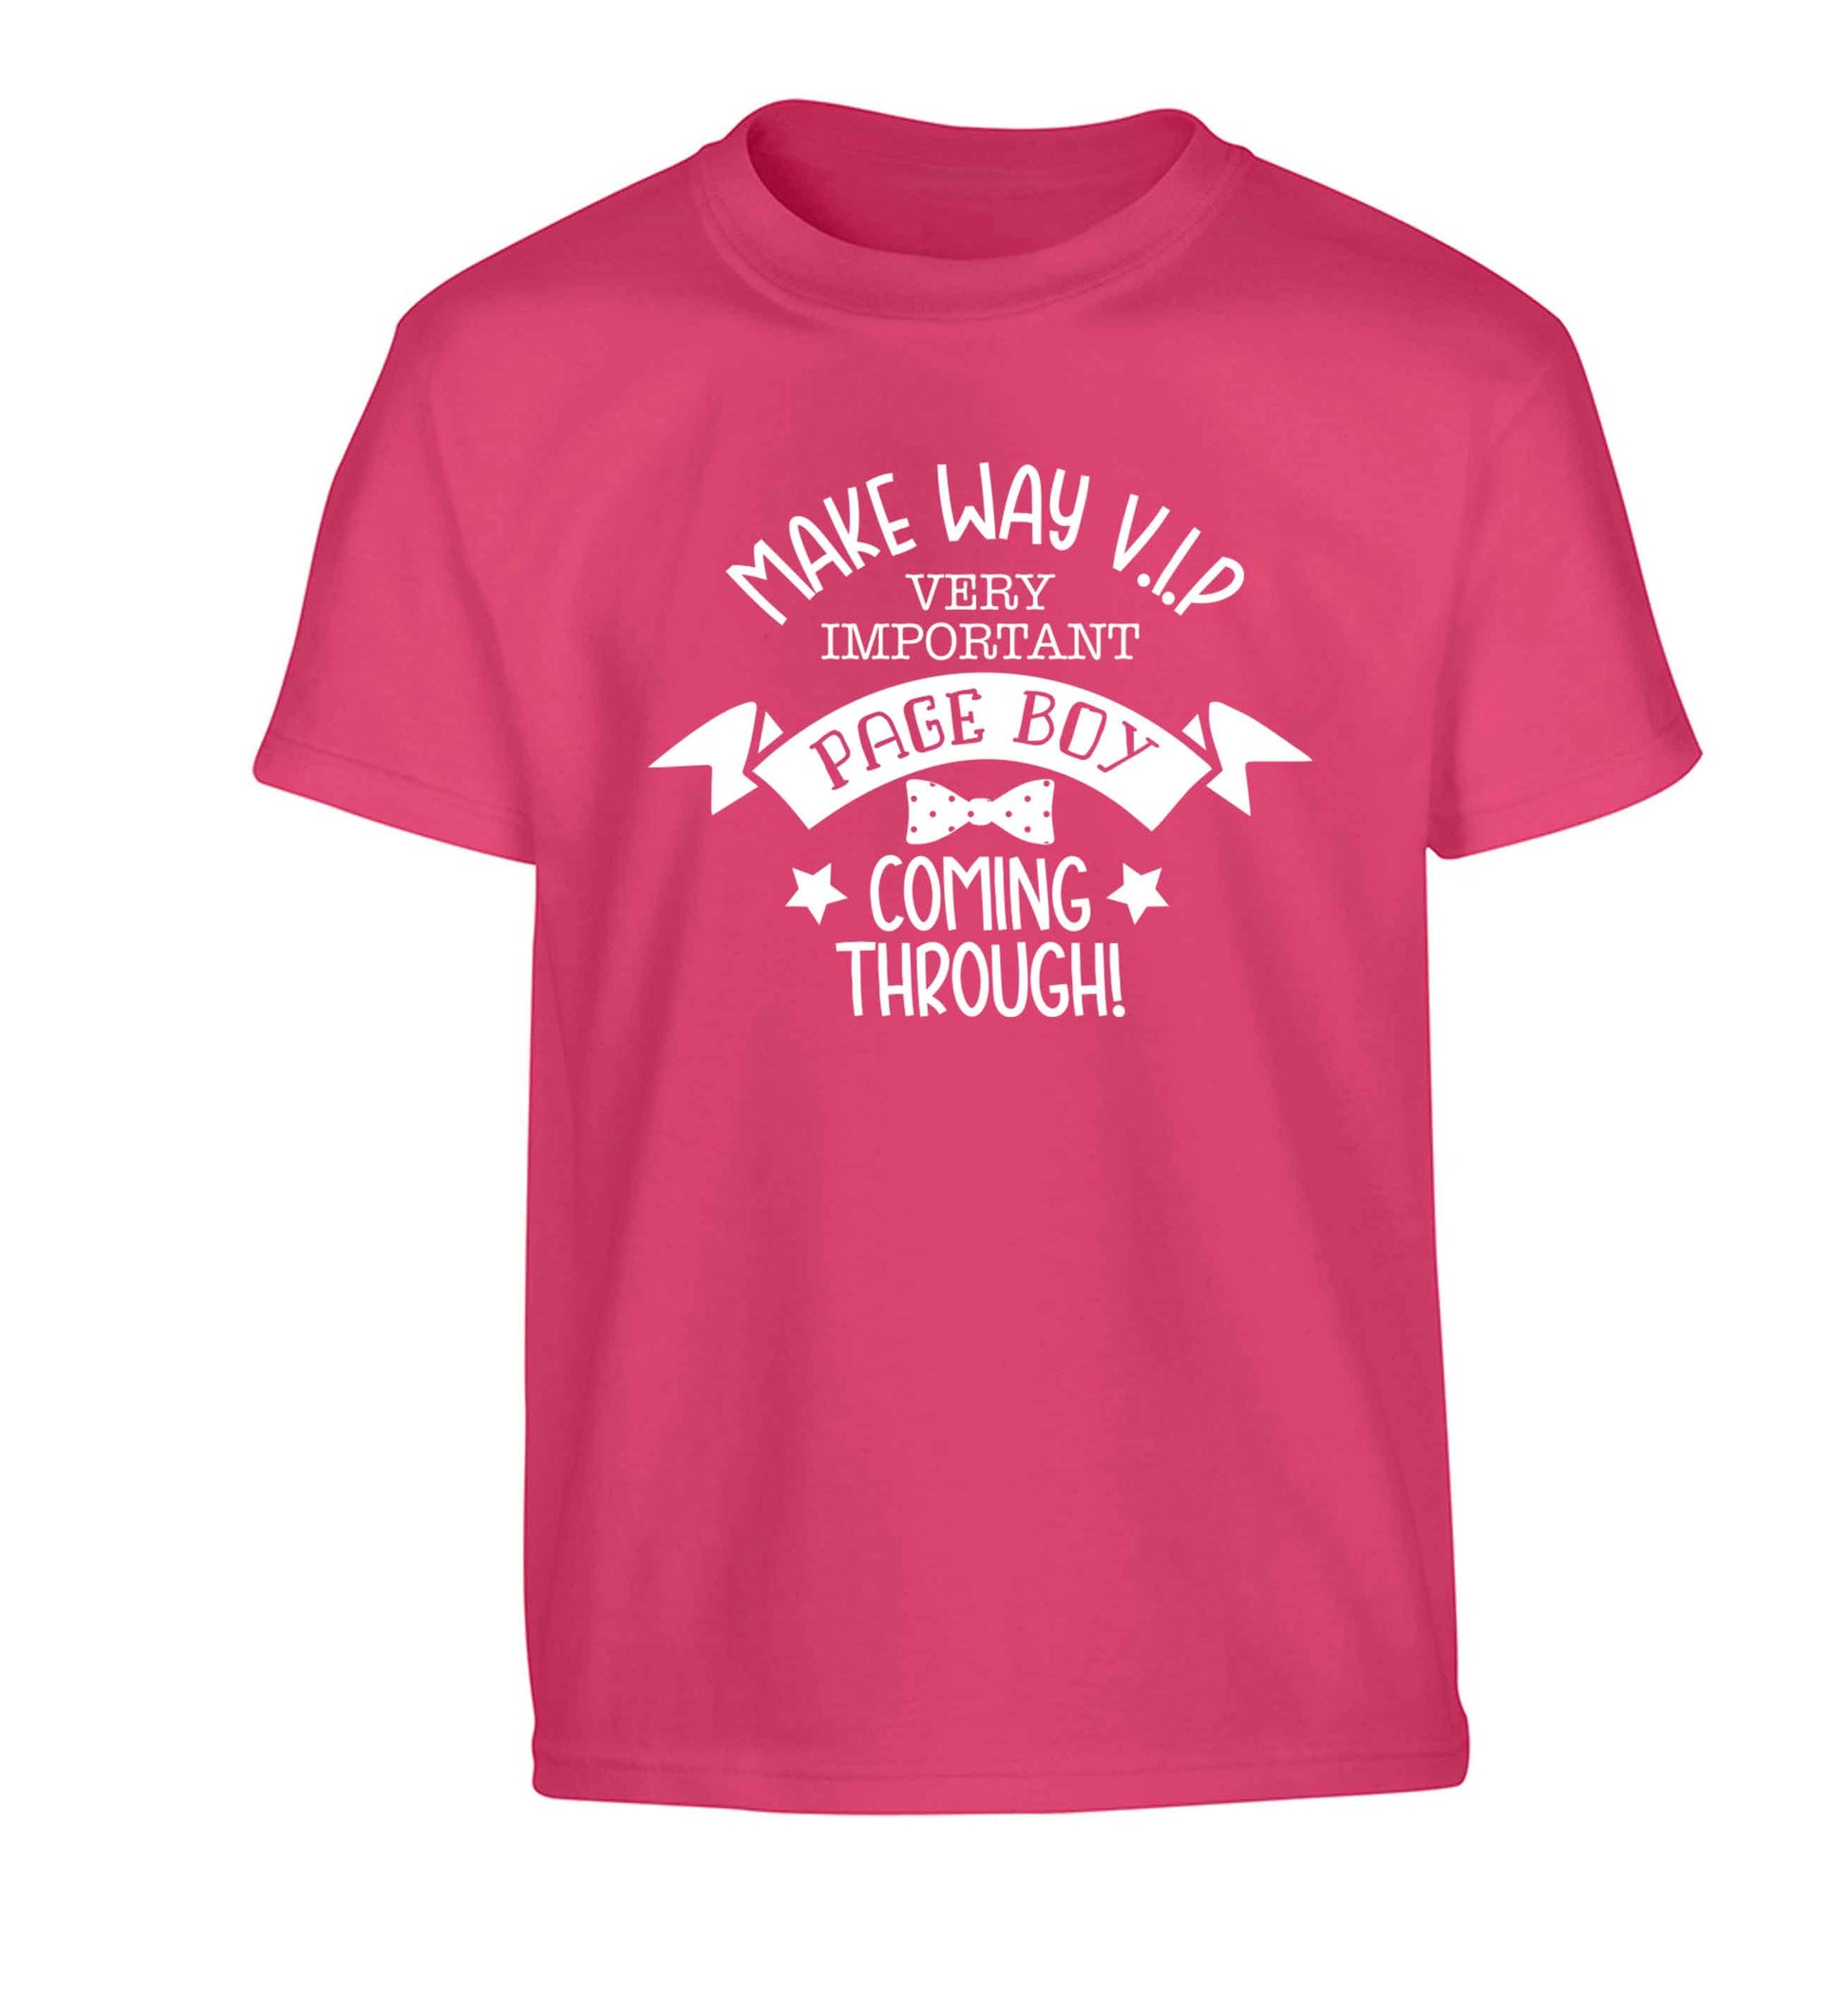 Make way V.I.P page boy coming through! Children's pink Tshirt 12-13 Years